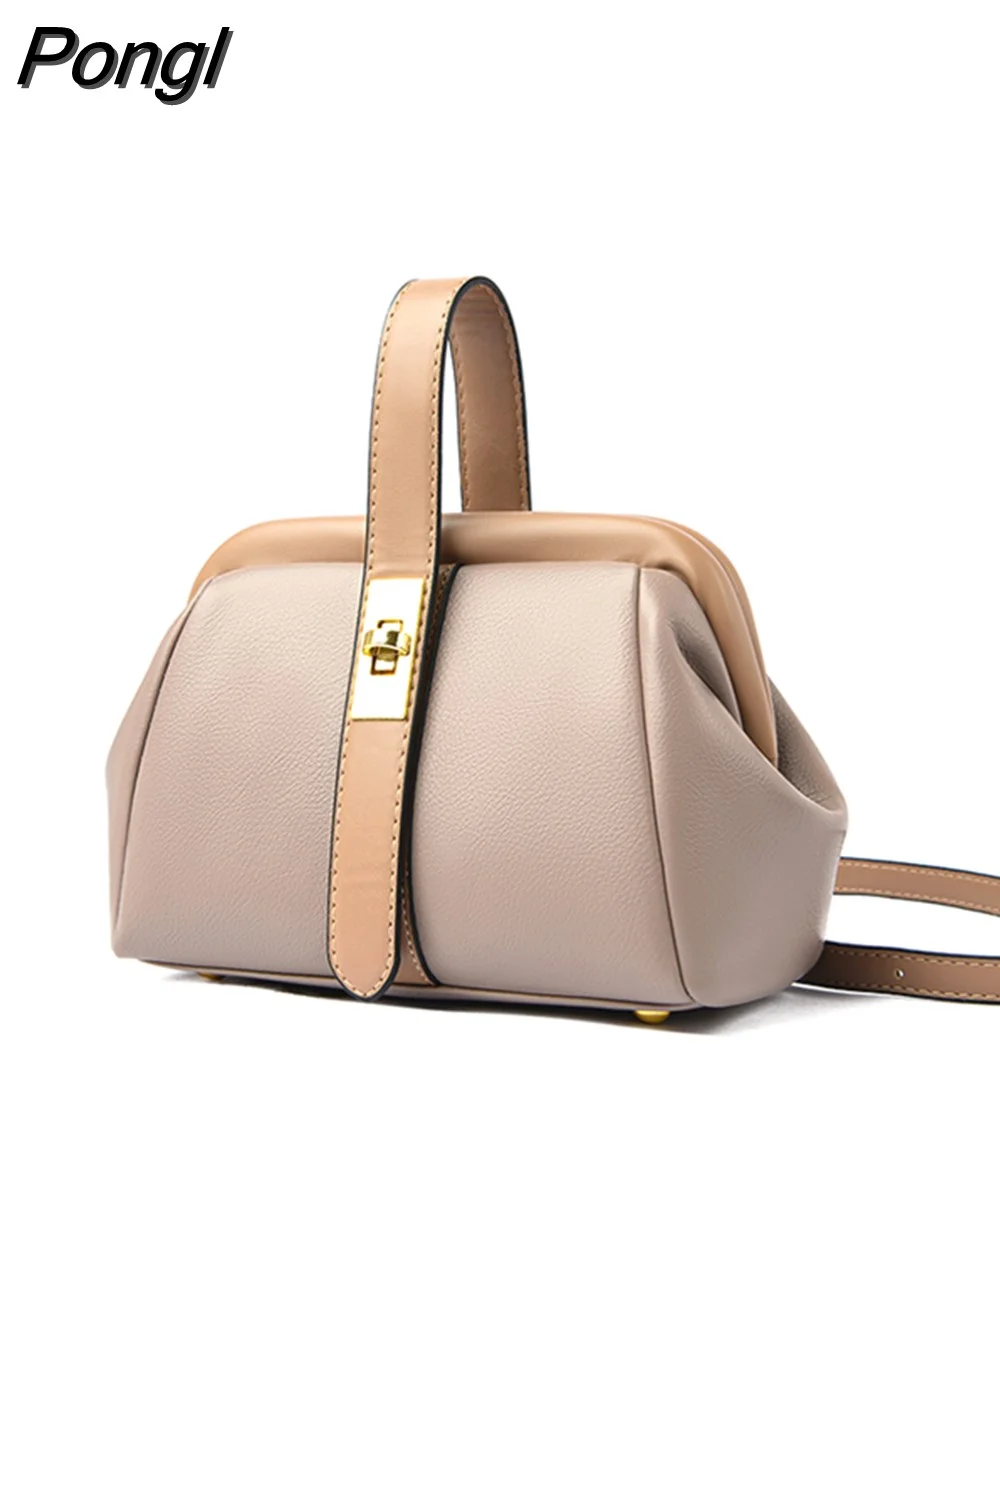 Pongl Women Bag Fashion Lady Handbags Luxury Trend Shoulder Bags Elegant Versatile Women's Bag Hot Crossbody Classic Brand Messenger